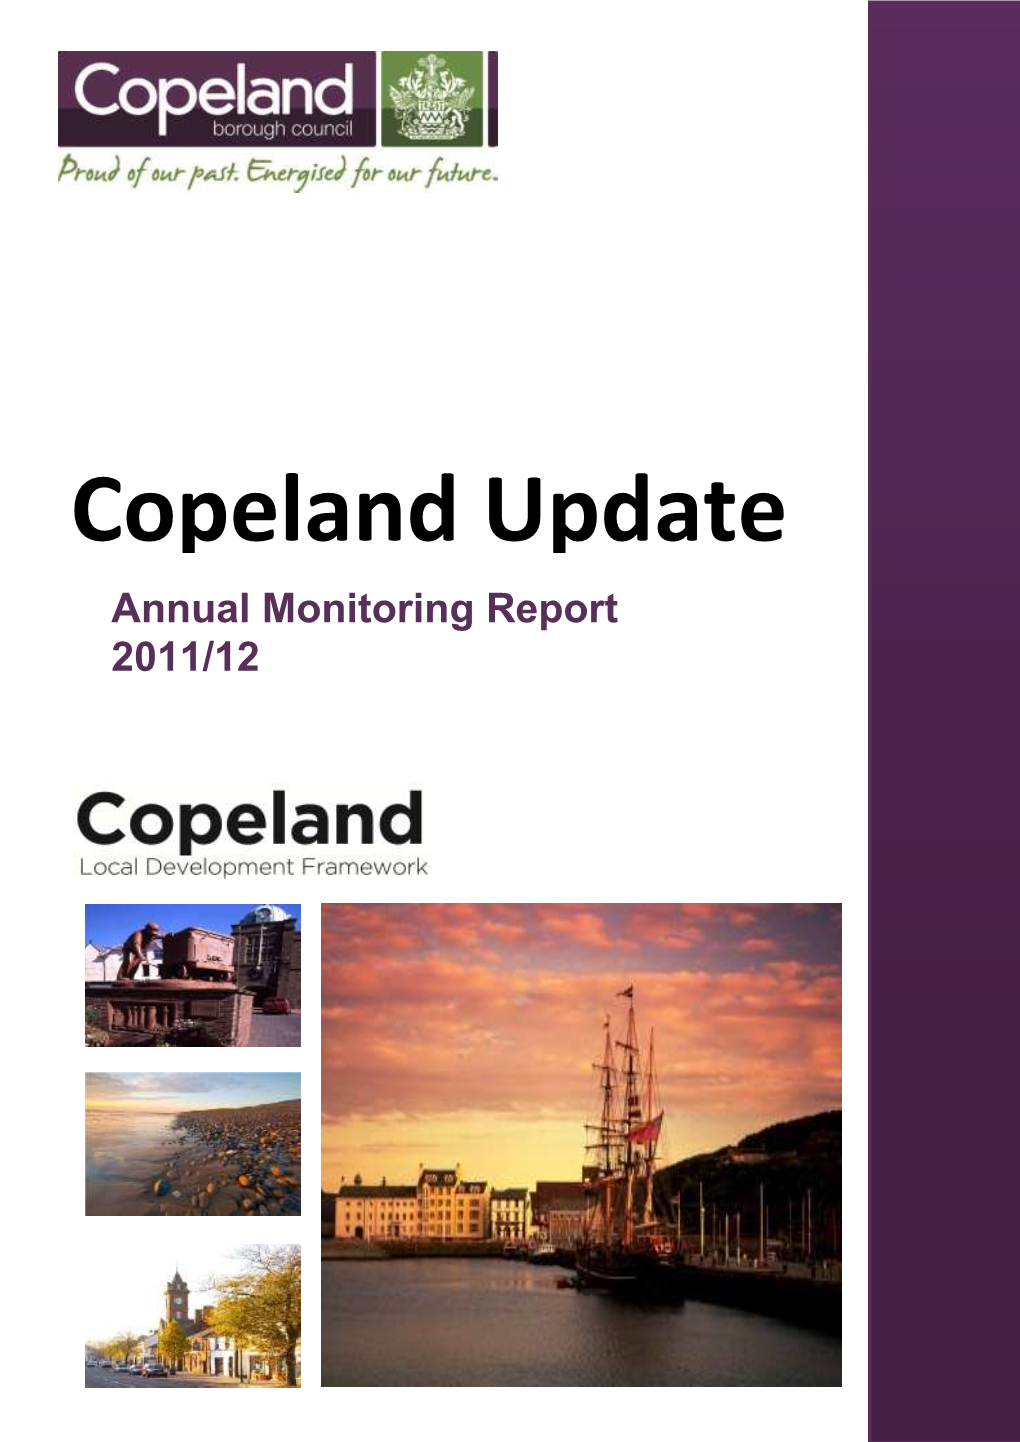 Copeland Update Annual Monitoring Report 2011/12